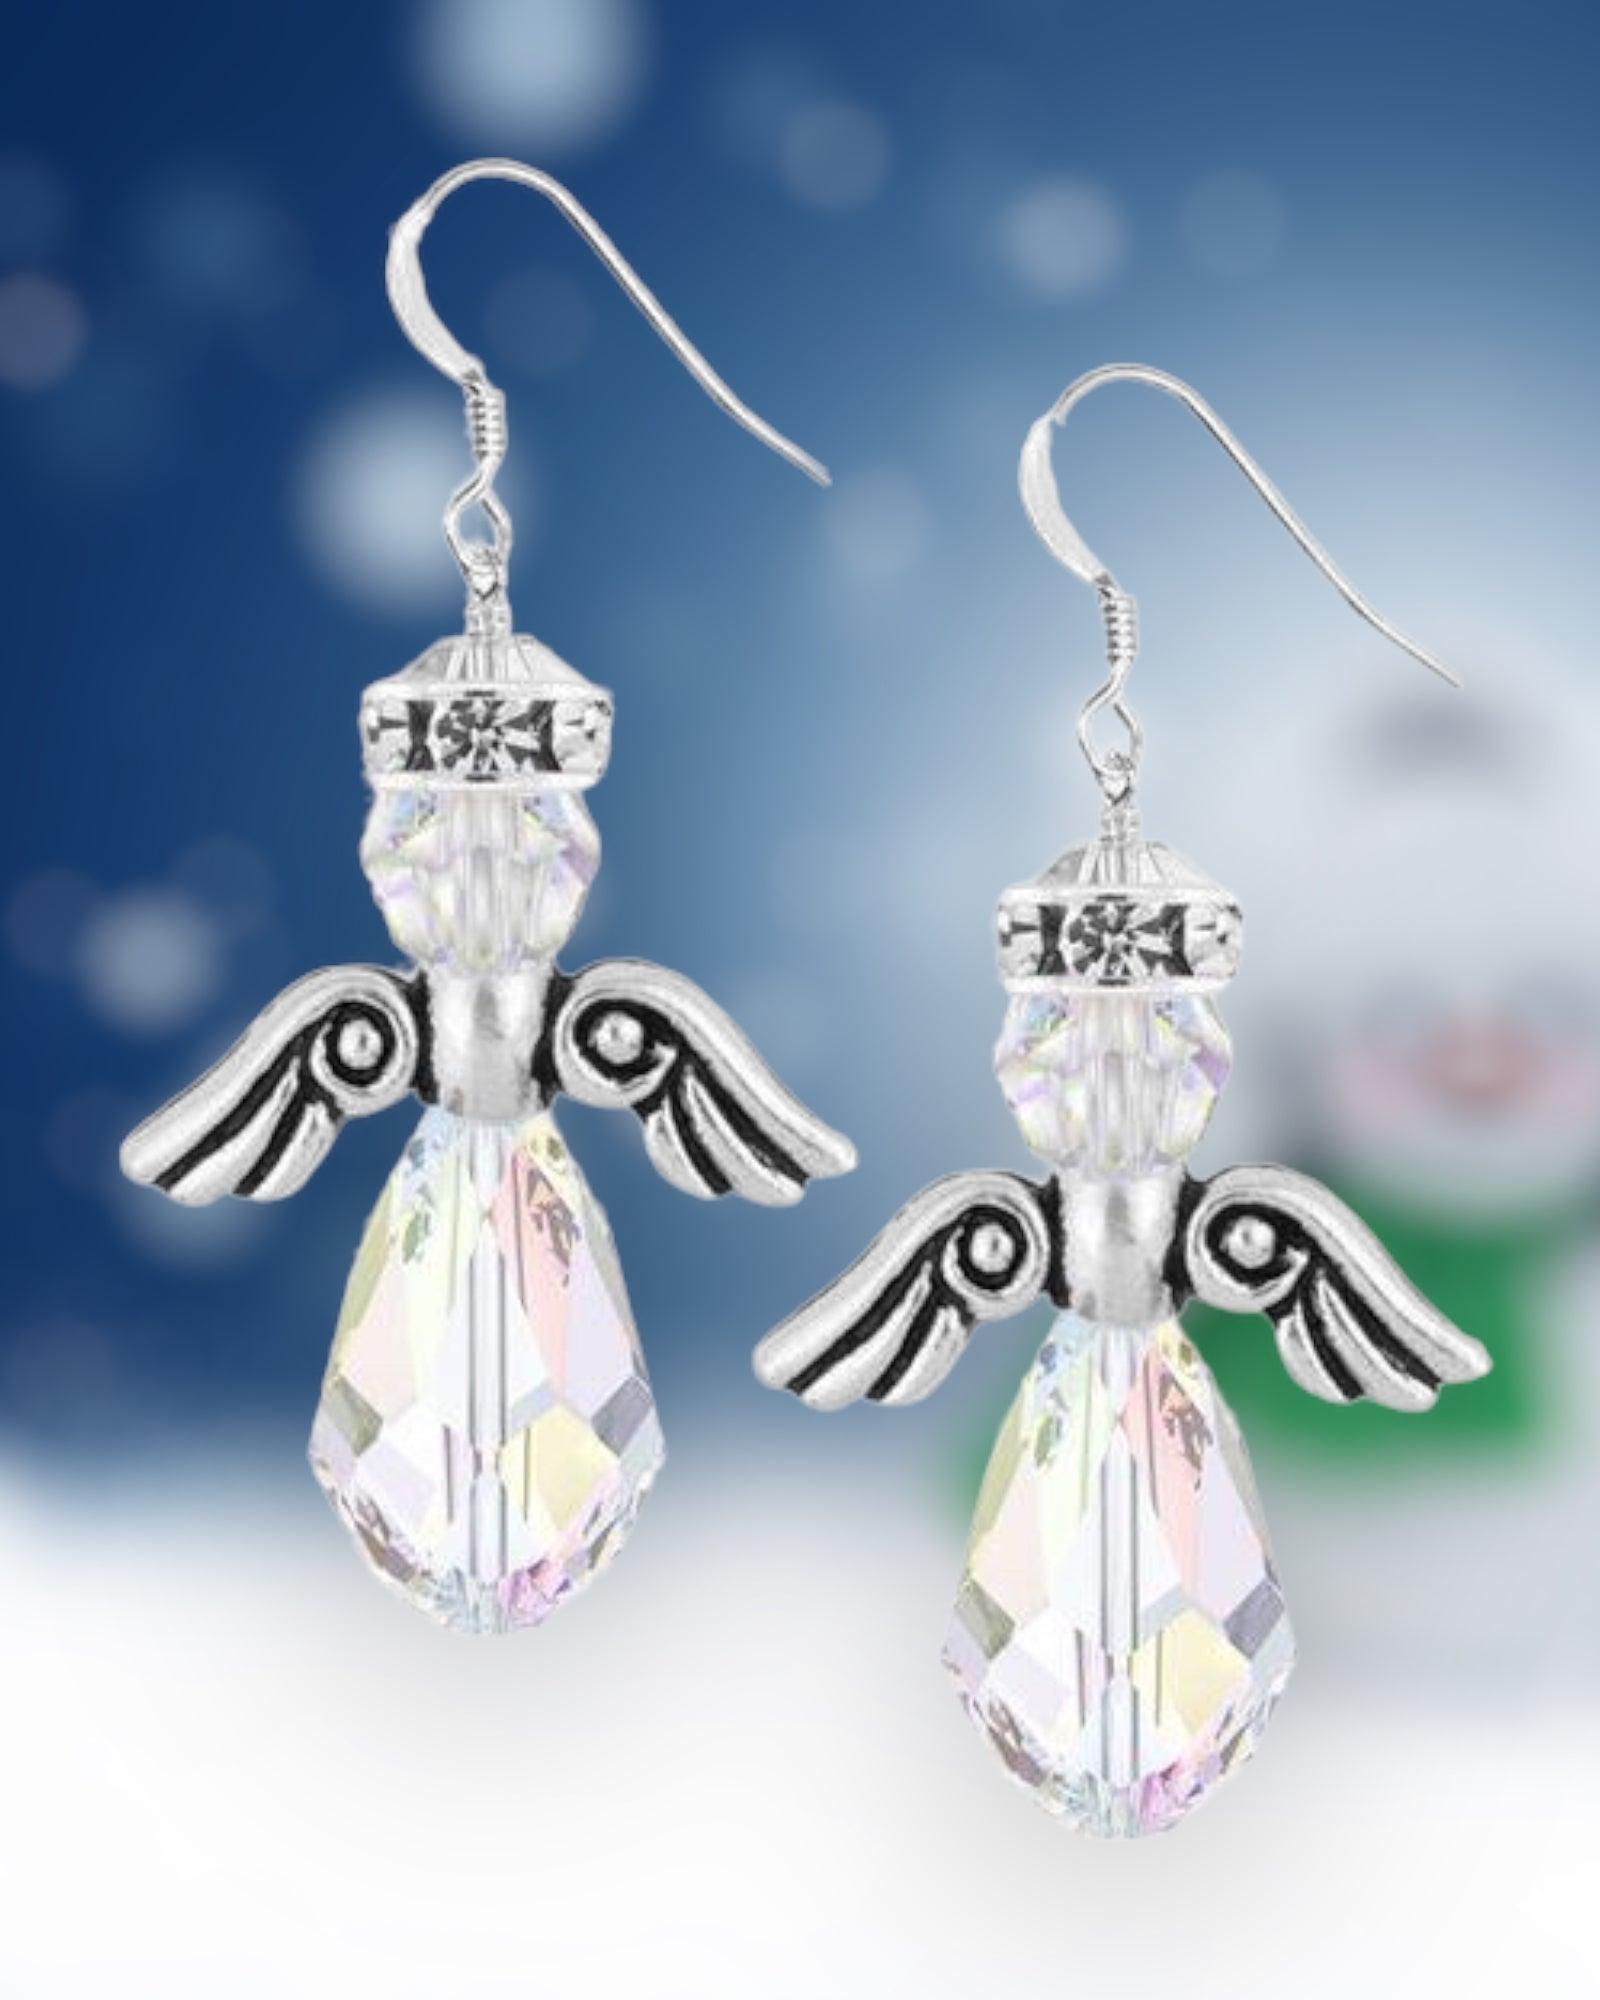 Swarovski Angel Earring  with Pewter Wings - Christmas Jewelry Making Kit